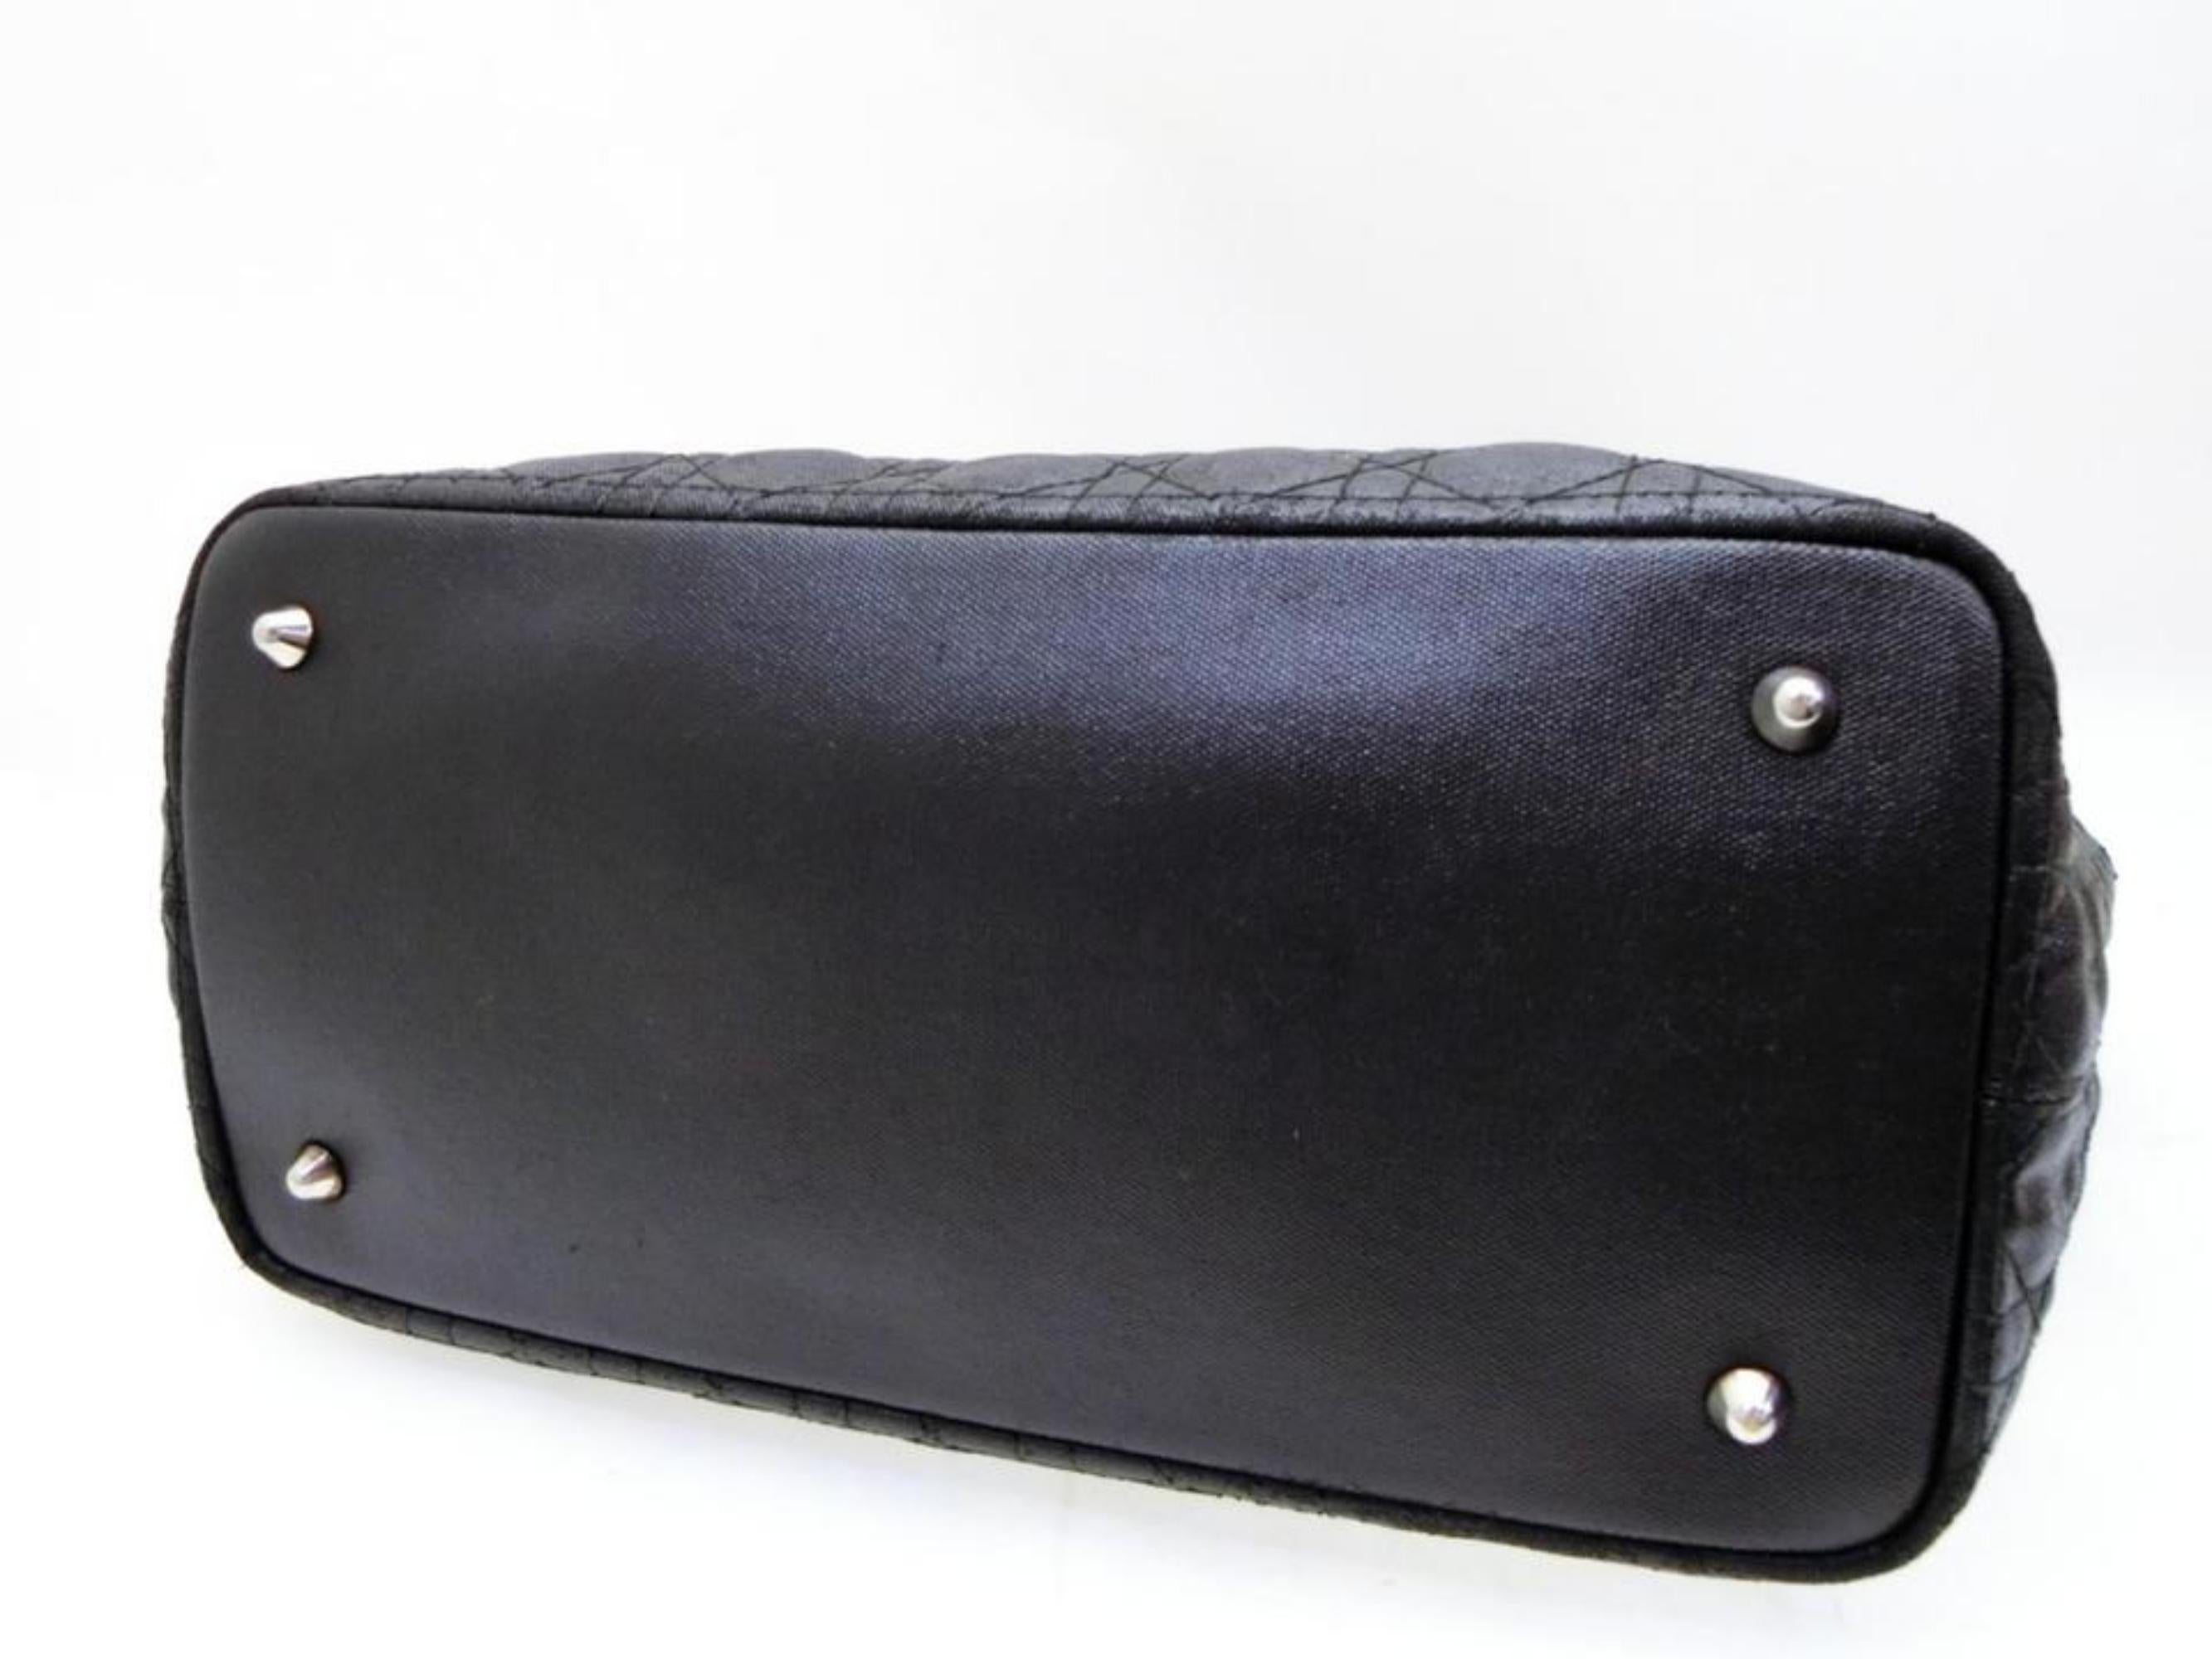 Dior Quilted Leather Cannage Shopper Tote 233793 Black Canvas Shoulder Bag For Sale 5